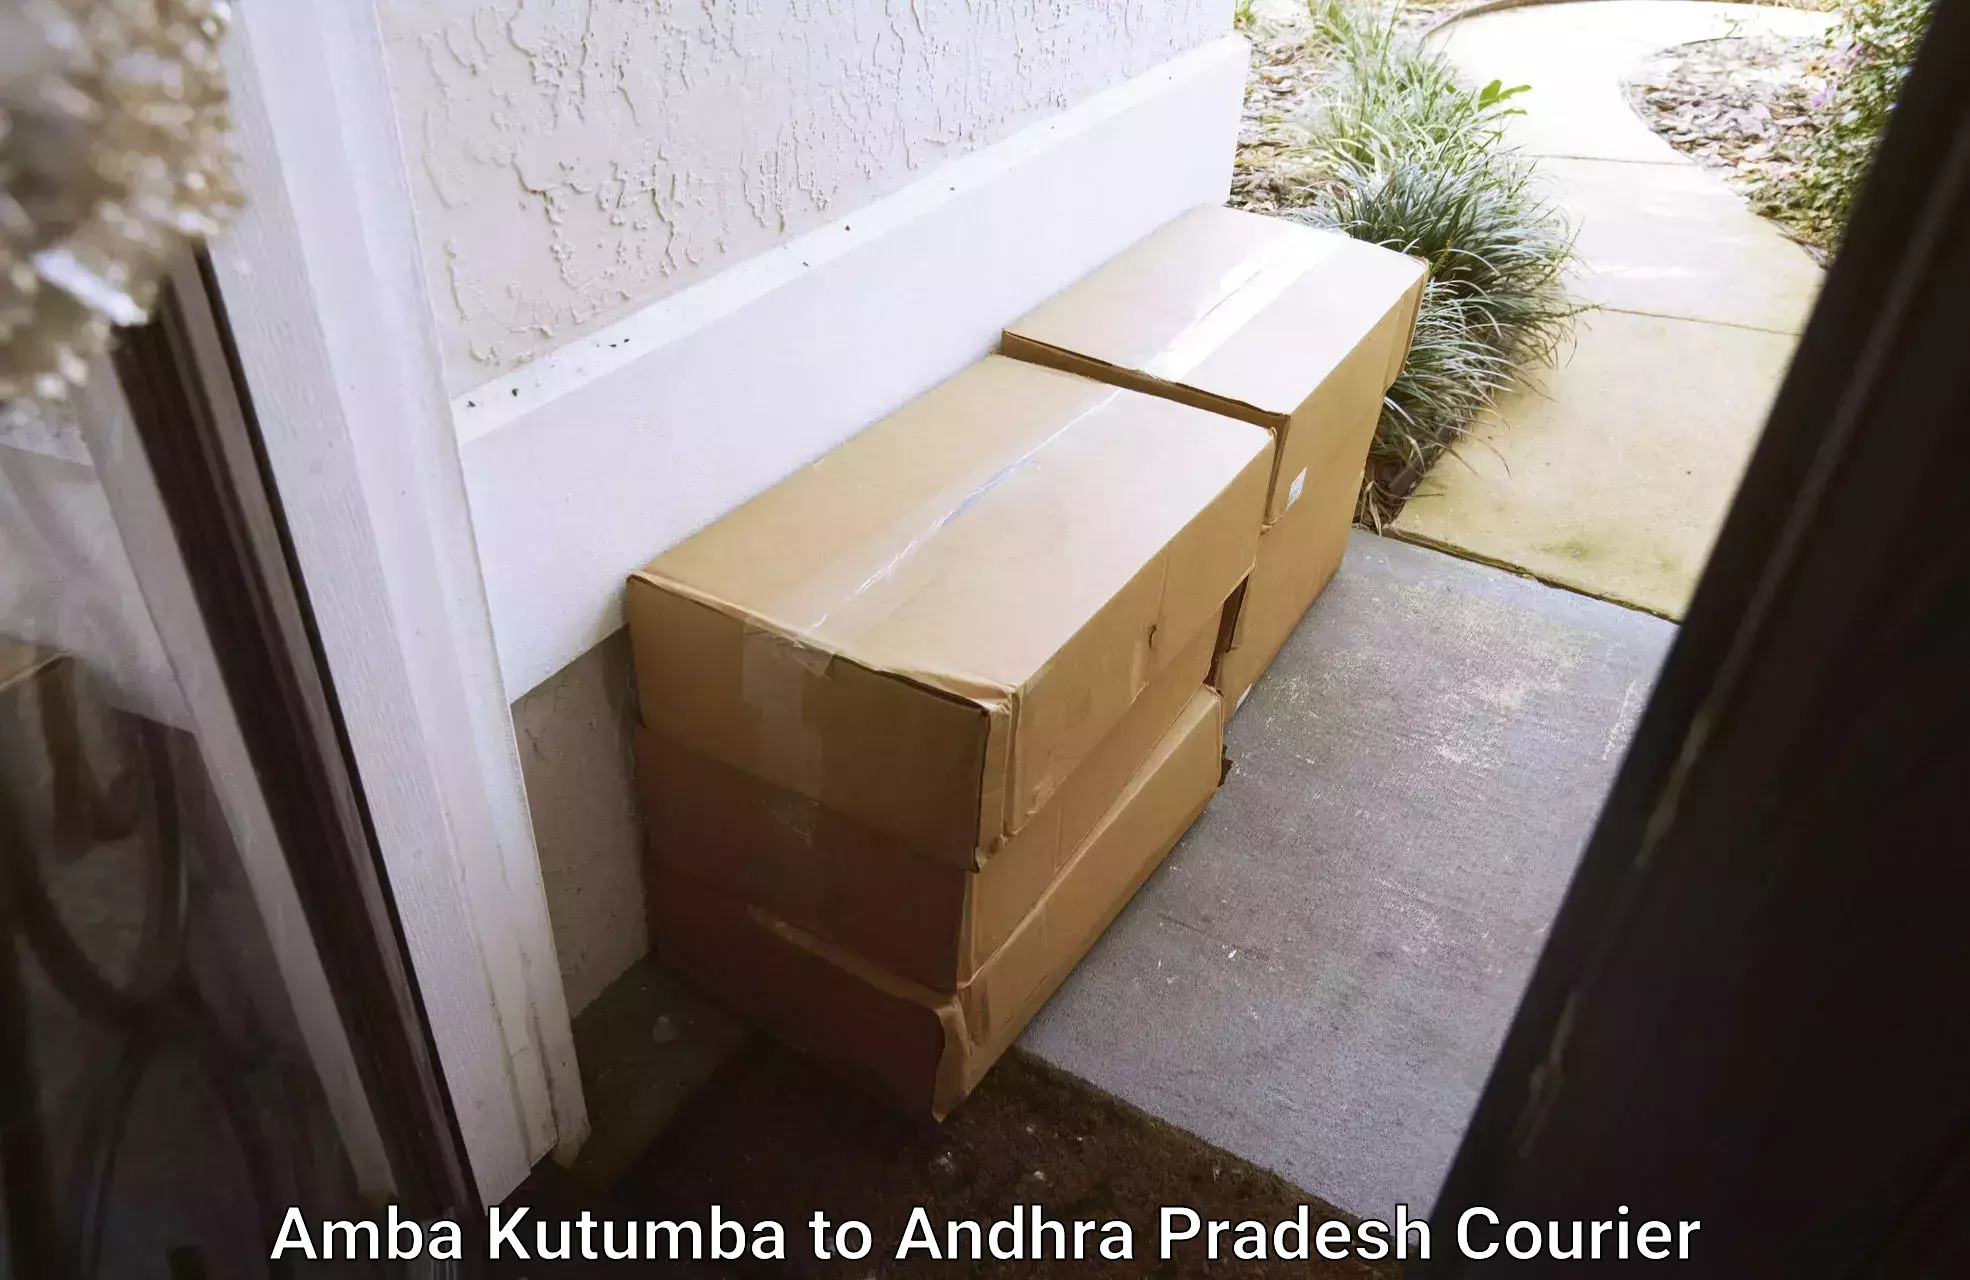 Efficient moving company Amba Kutumba to Andhra Pradesh